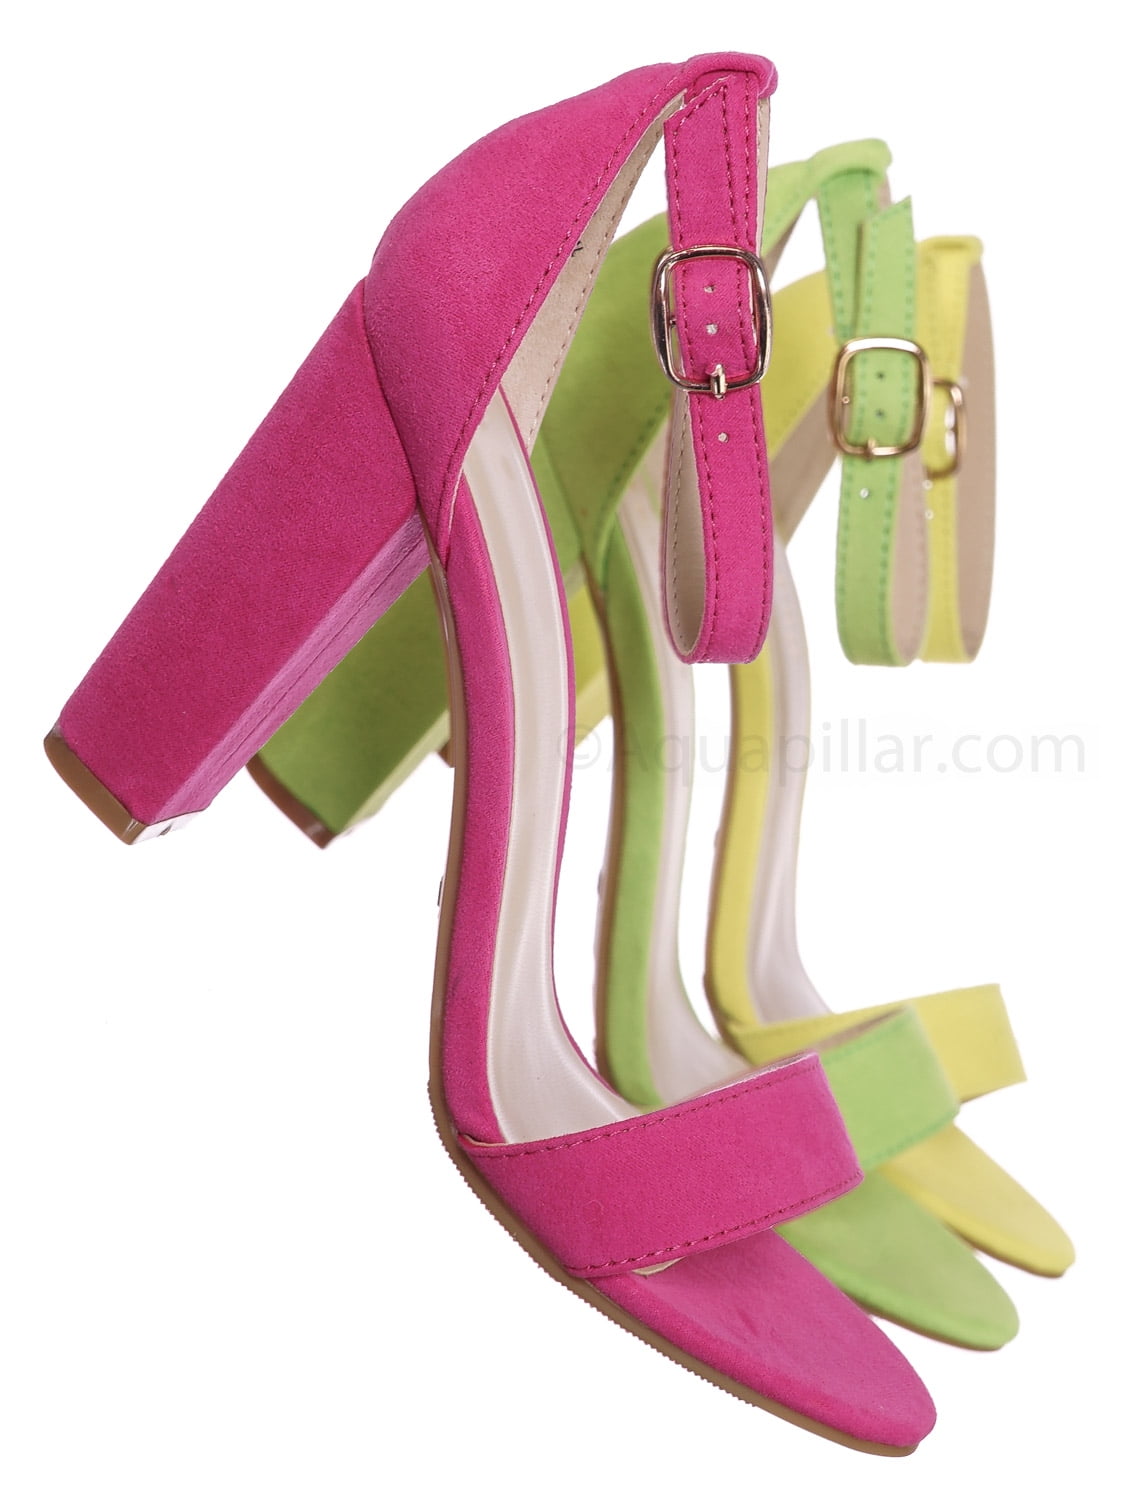 bright pink block heel shoes